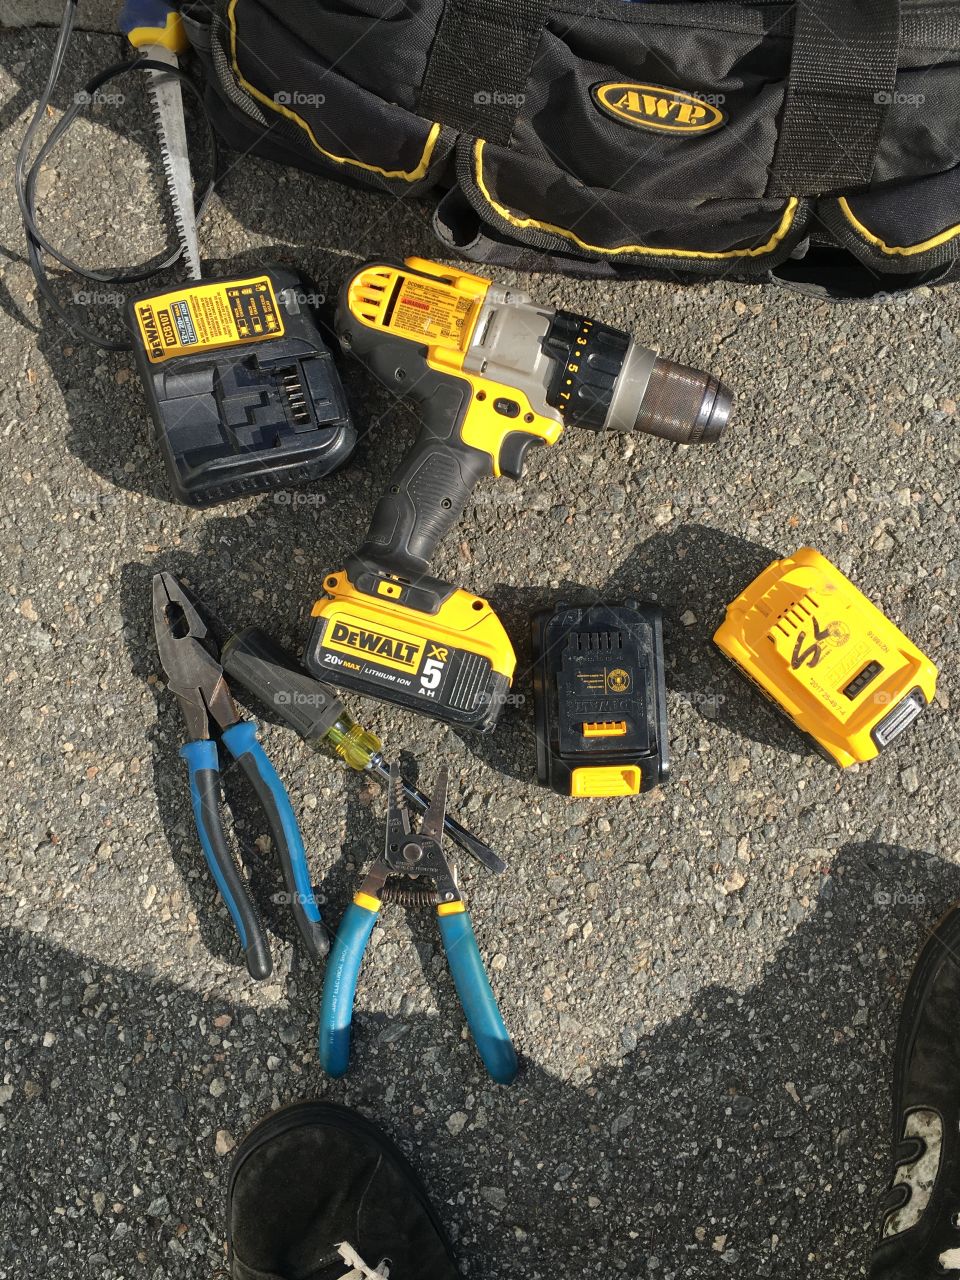 An electricians best friends. Dewalt and klein tools